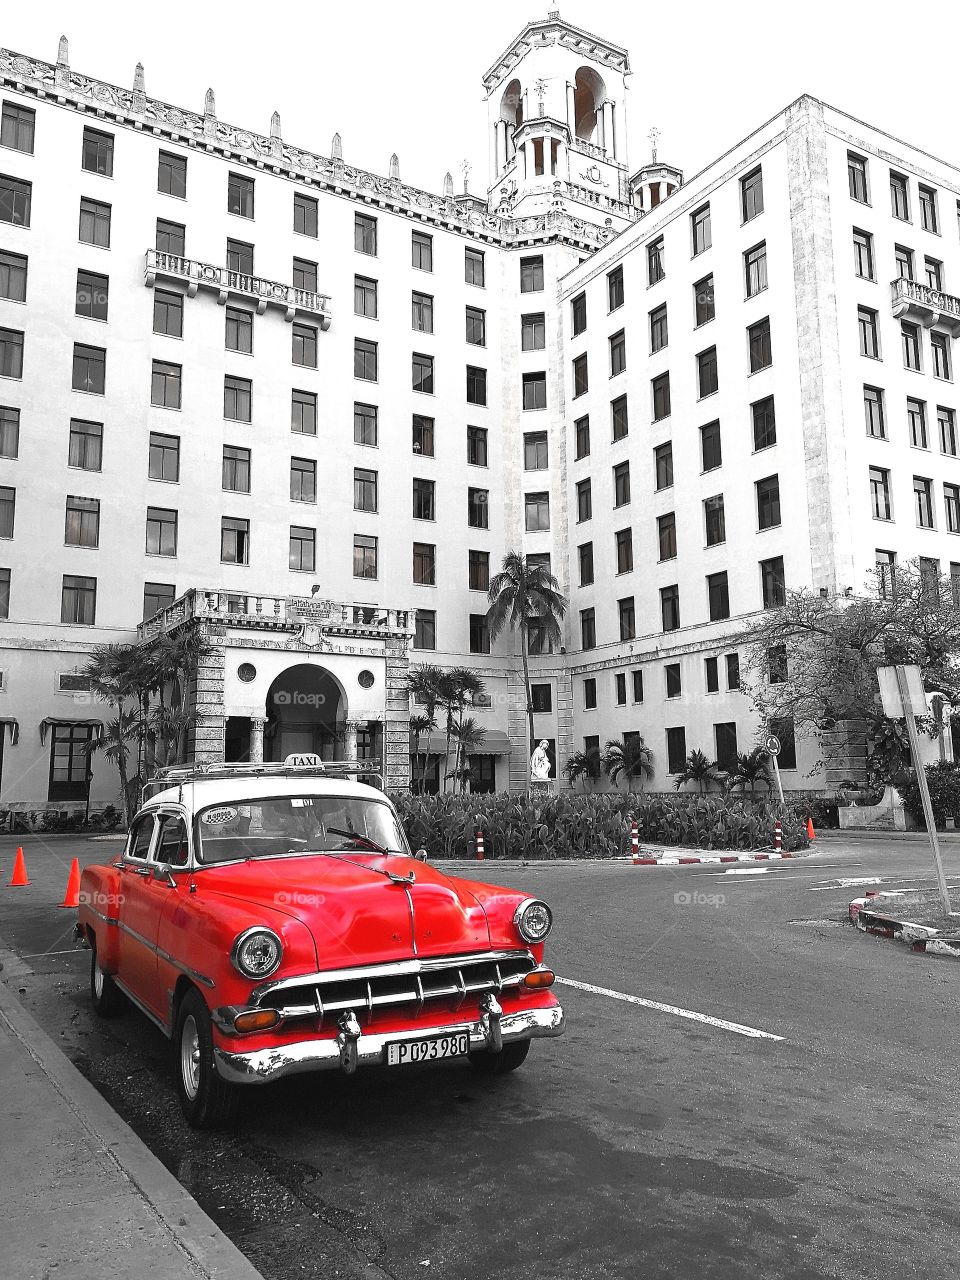 classic car on streets of Havana, Cuba